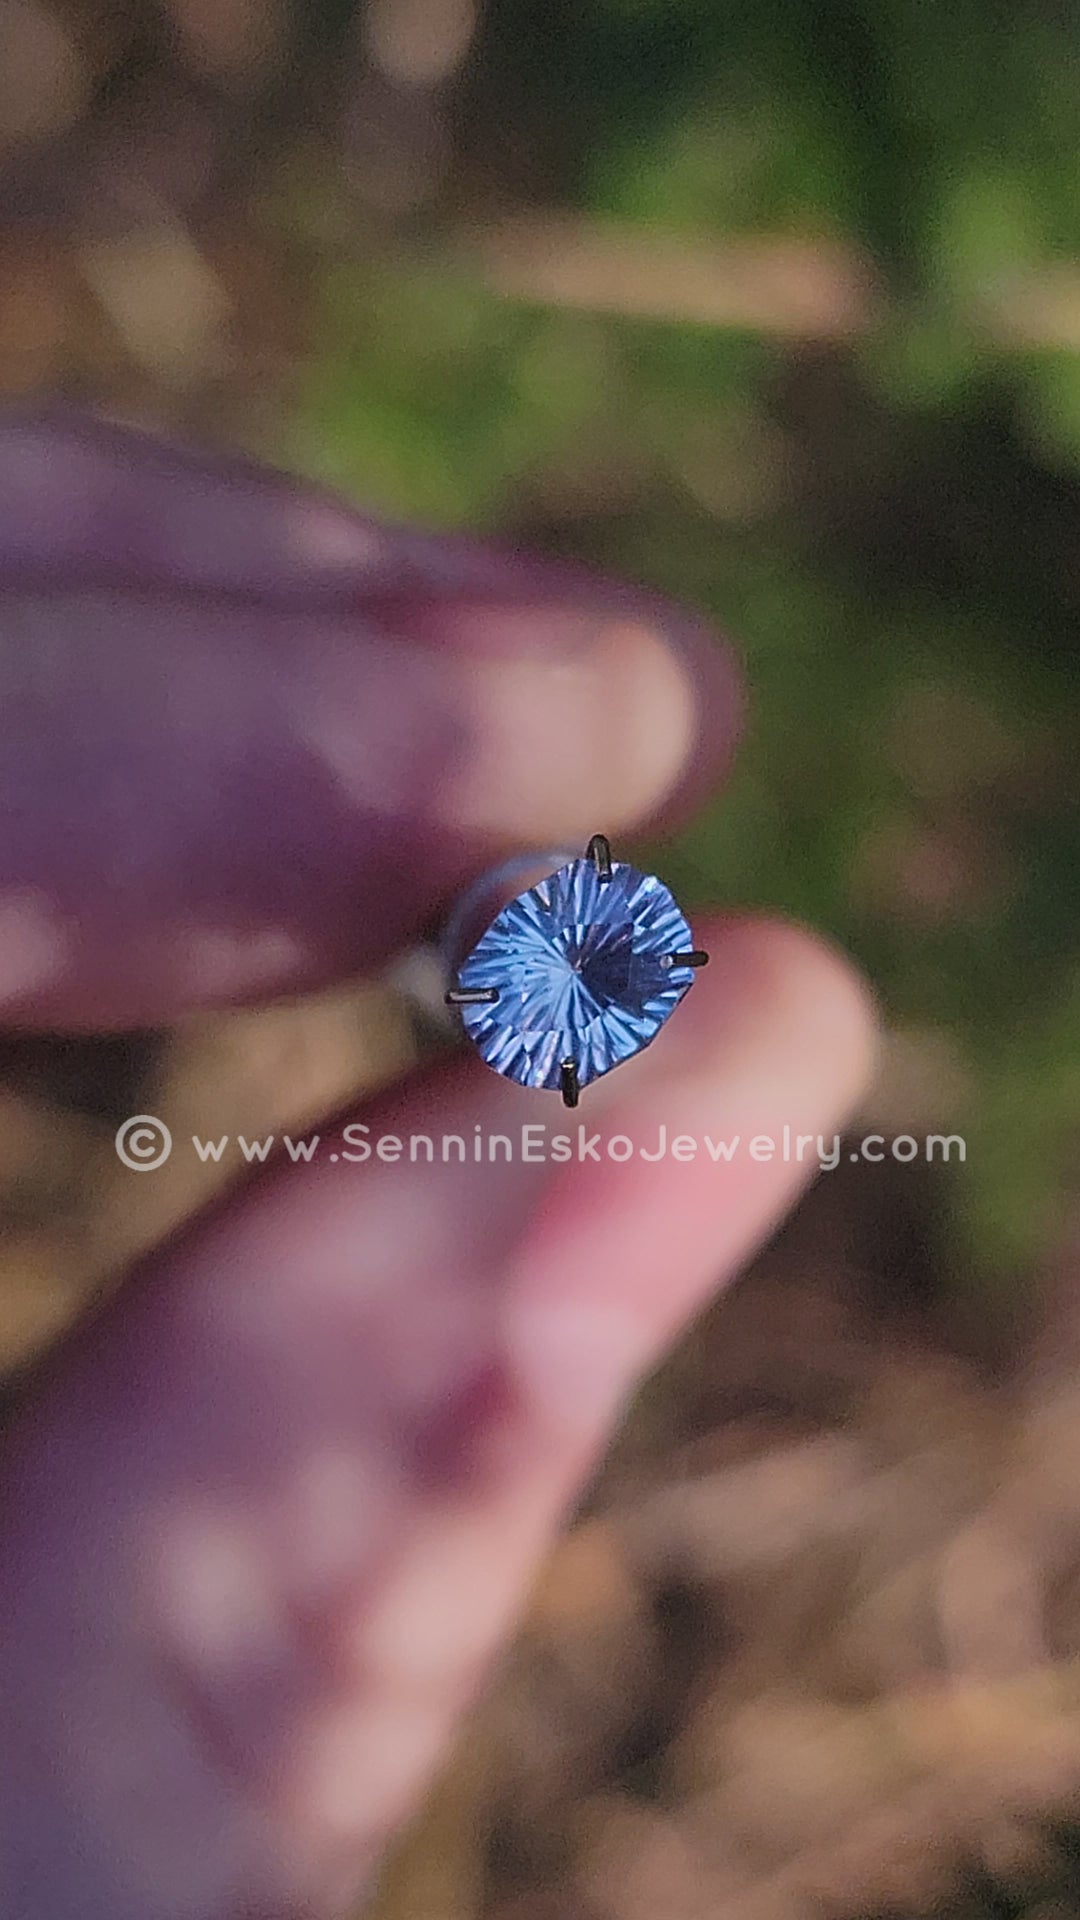 1.3 Carat Lilac Sapphire - Eye Clean - Galaxy Cut